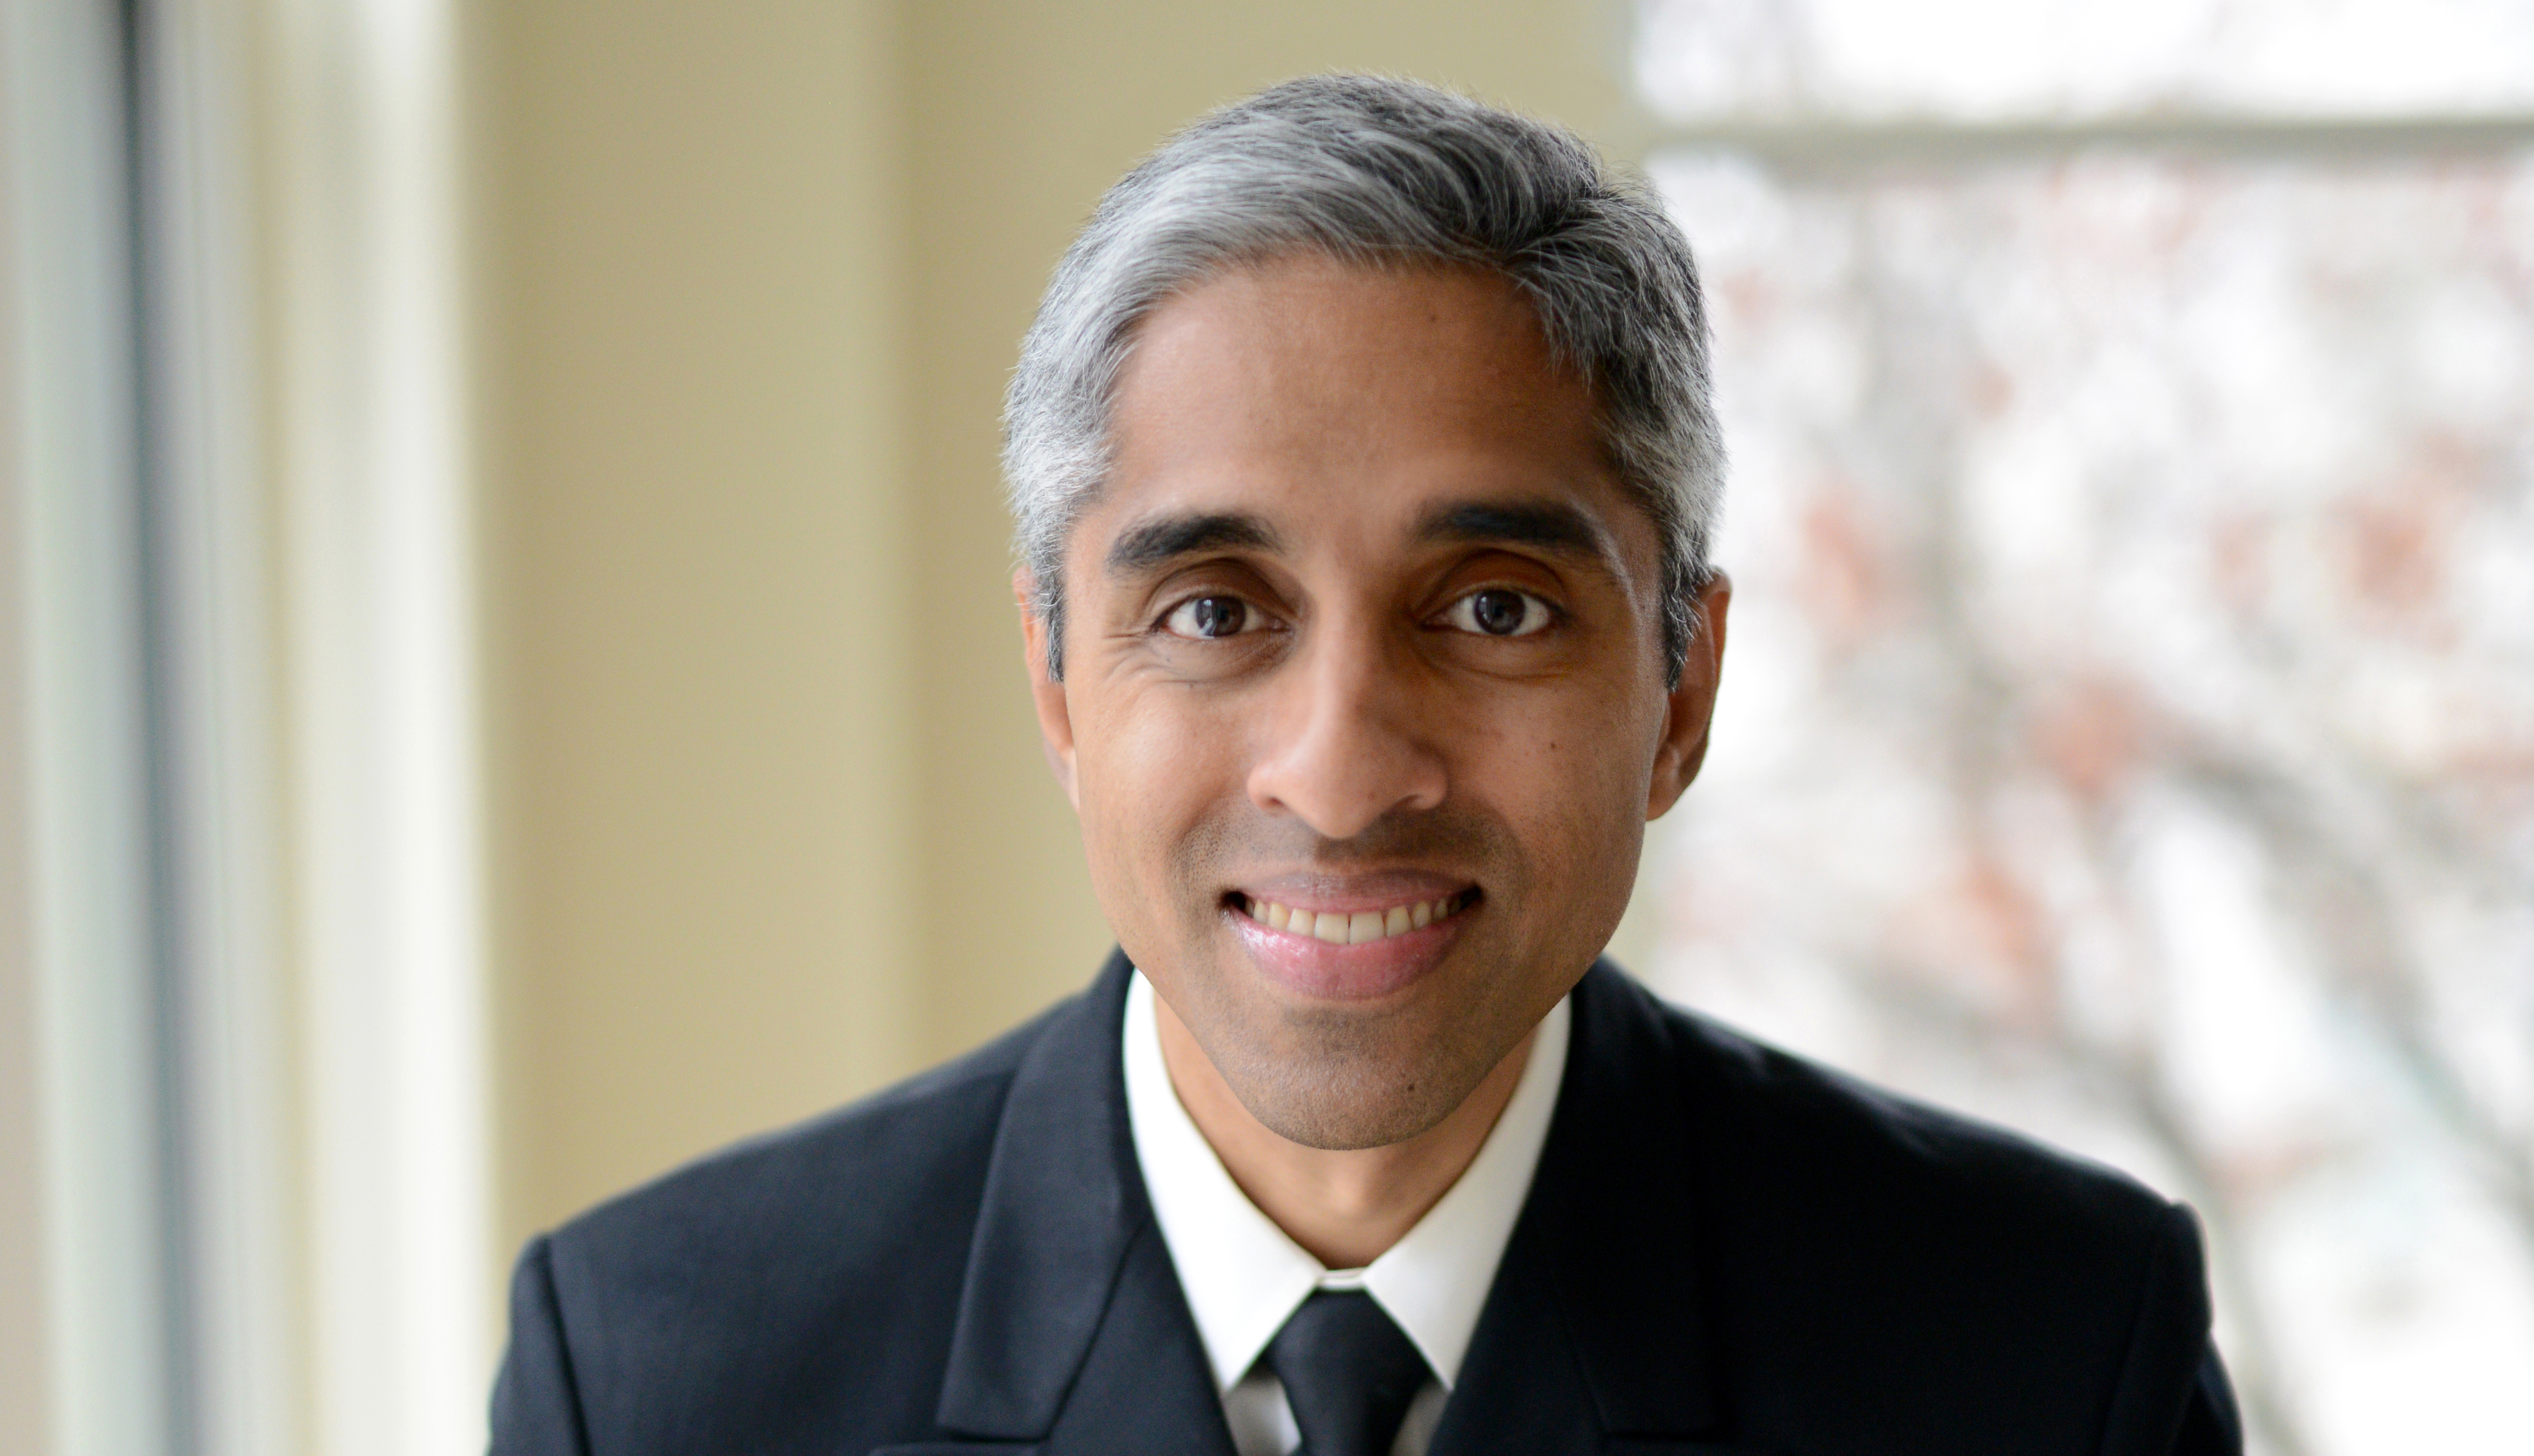 Dr. Vivek Murthy, cirujano general